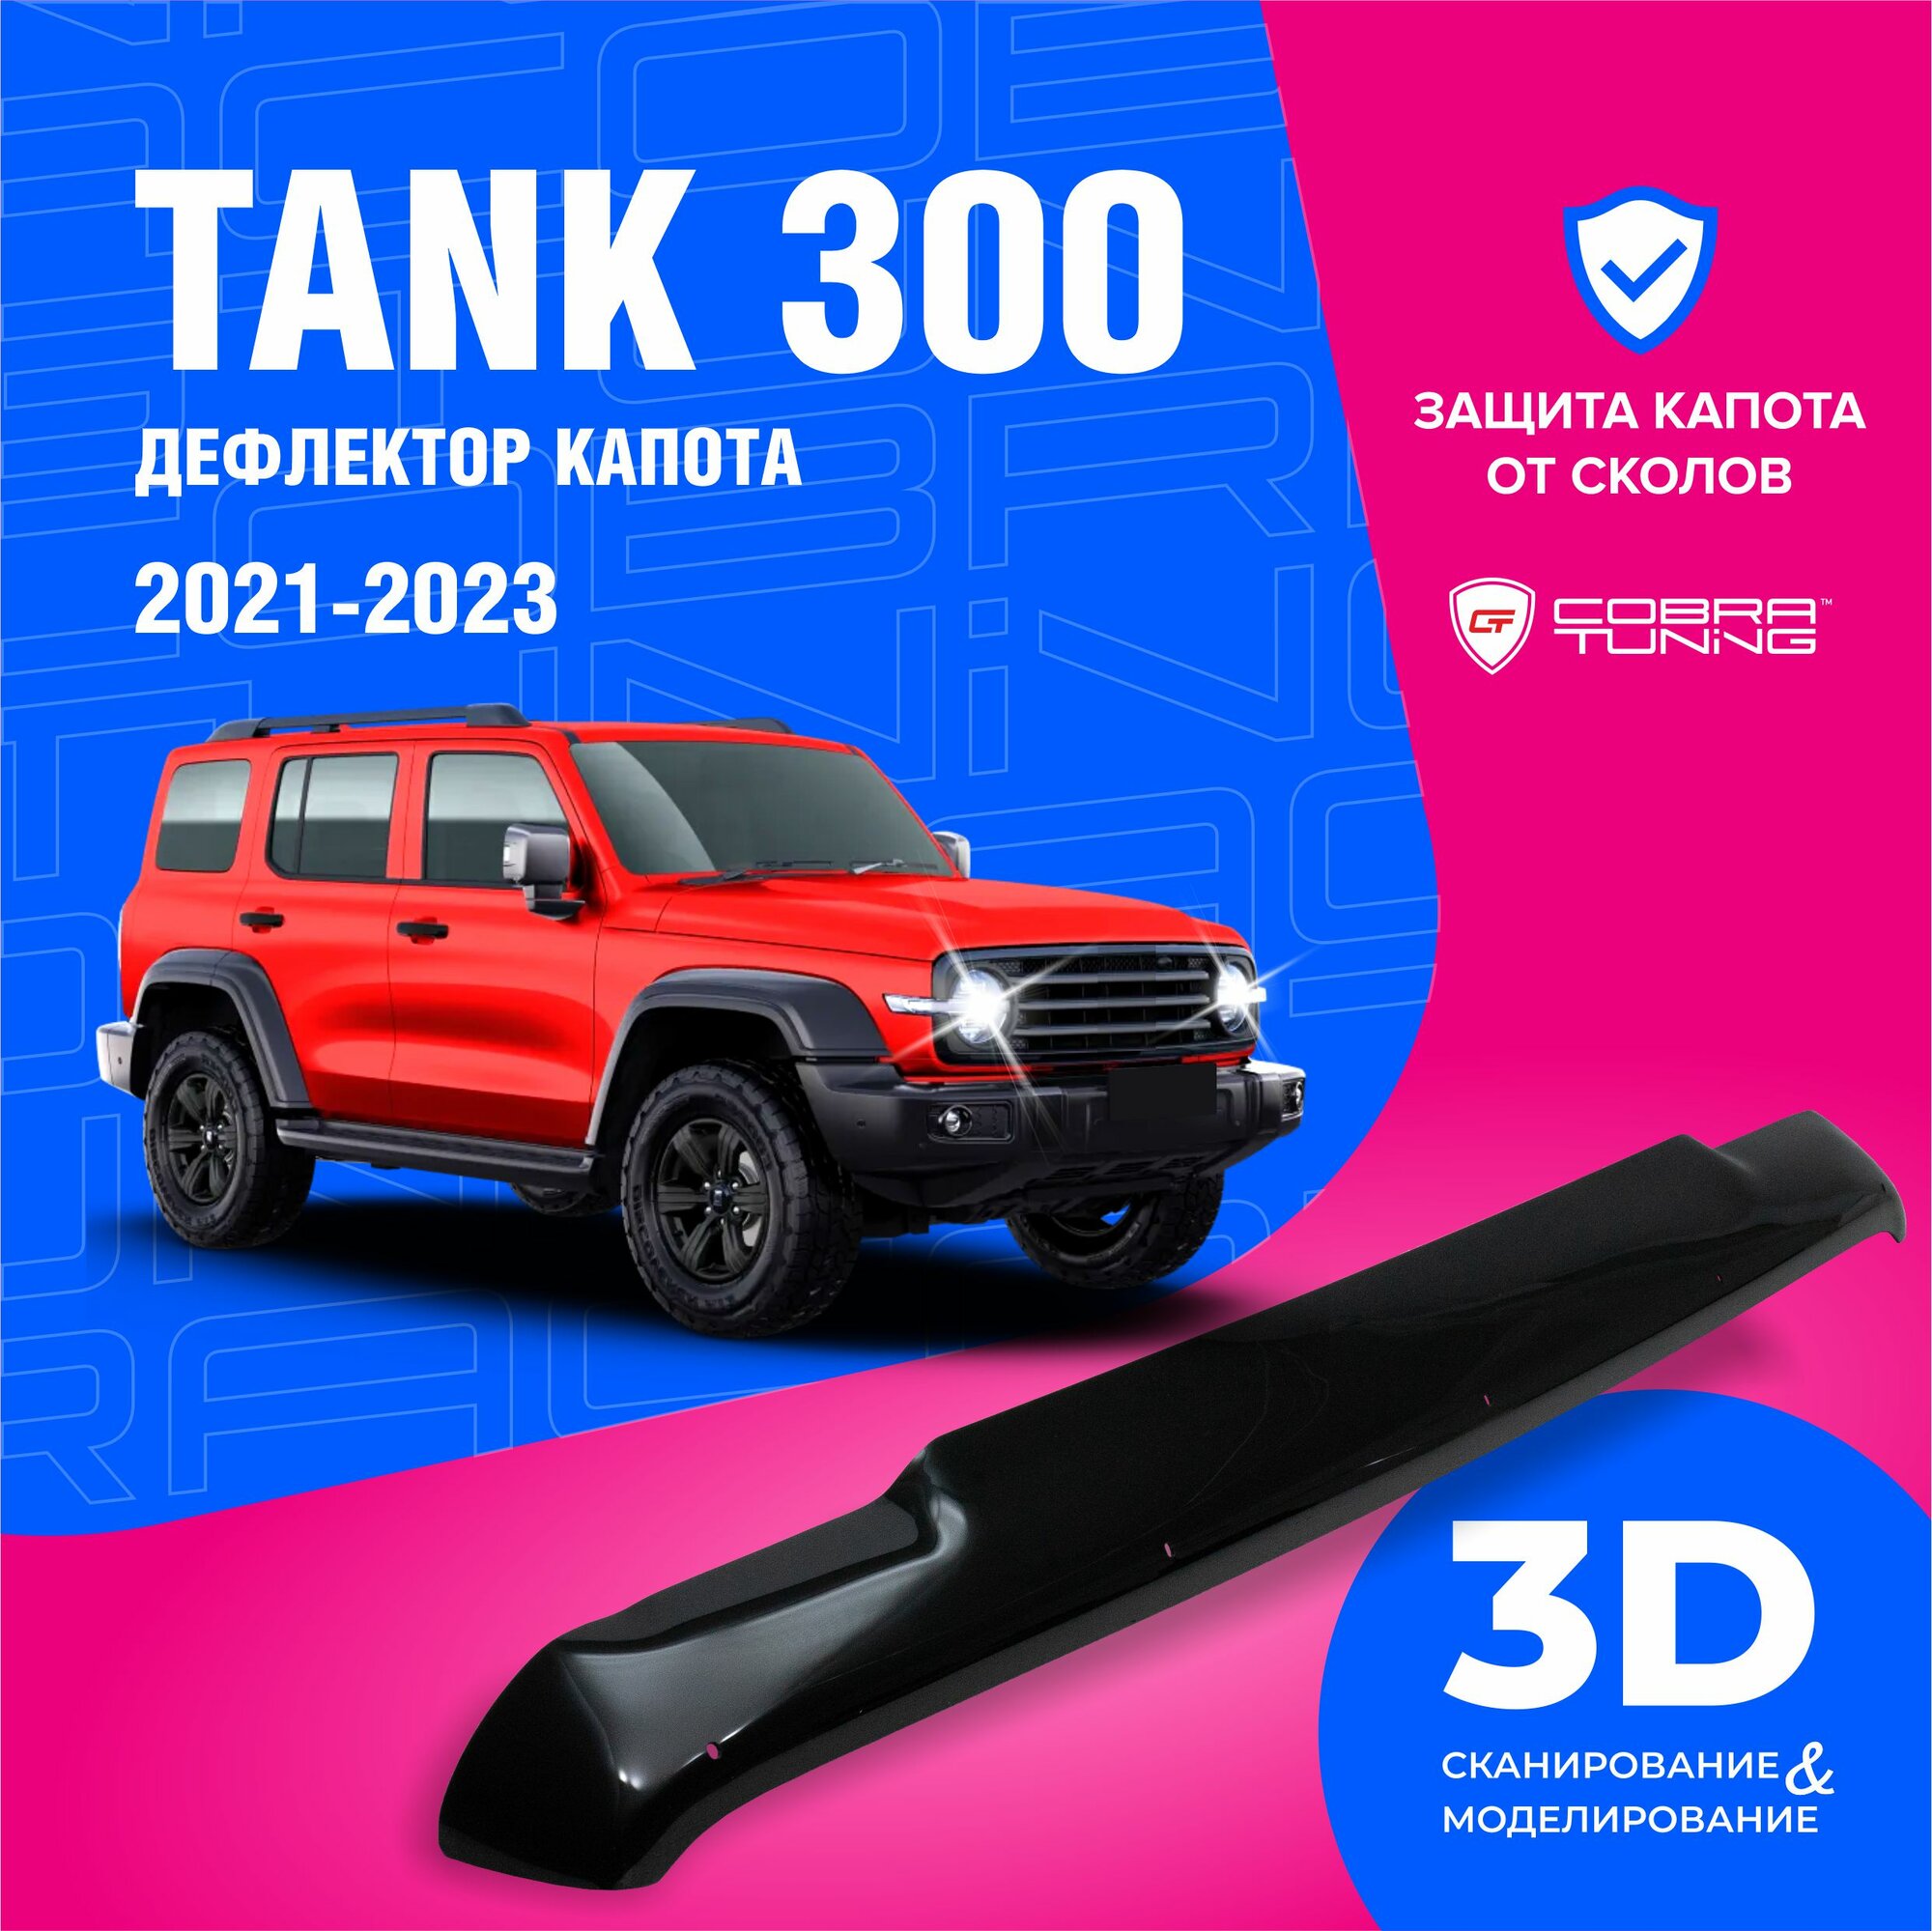 Дефлектор капота для автомобиля Tank 300 (Танк) 2021-2023 мухобойка защита от сколов Cobra Tuning